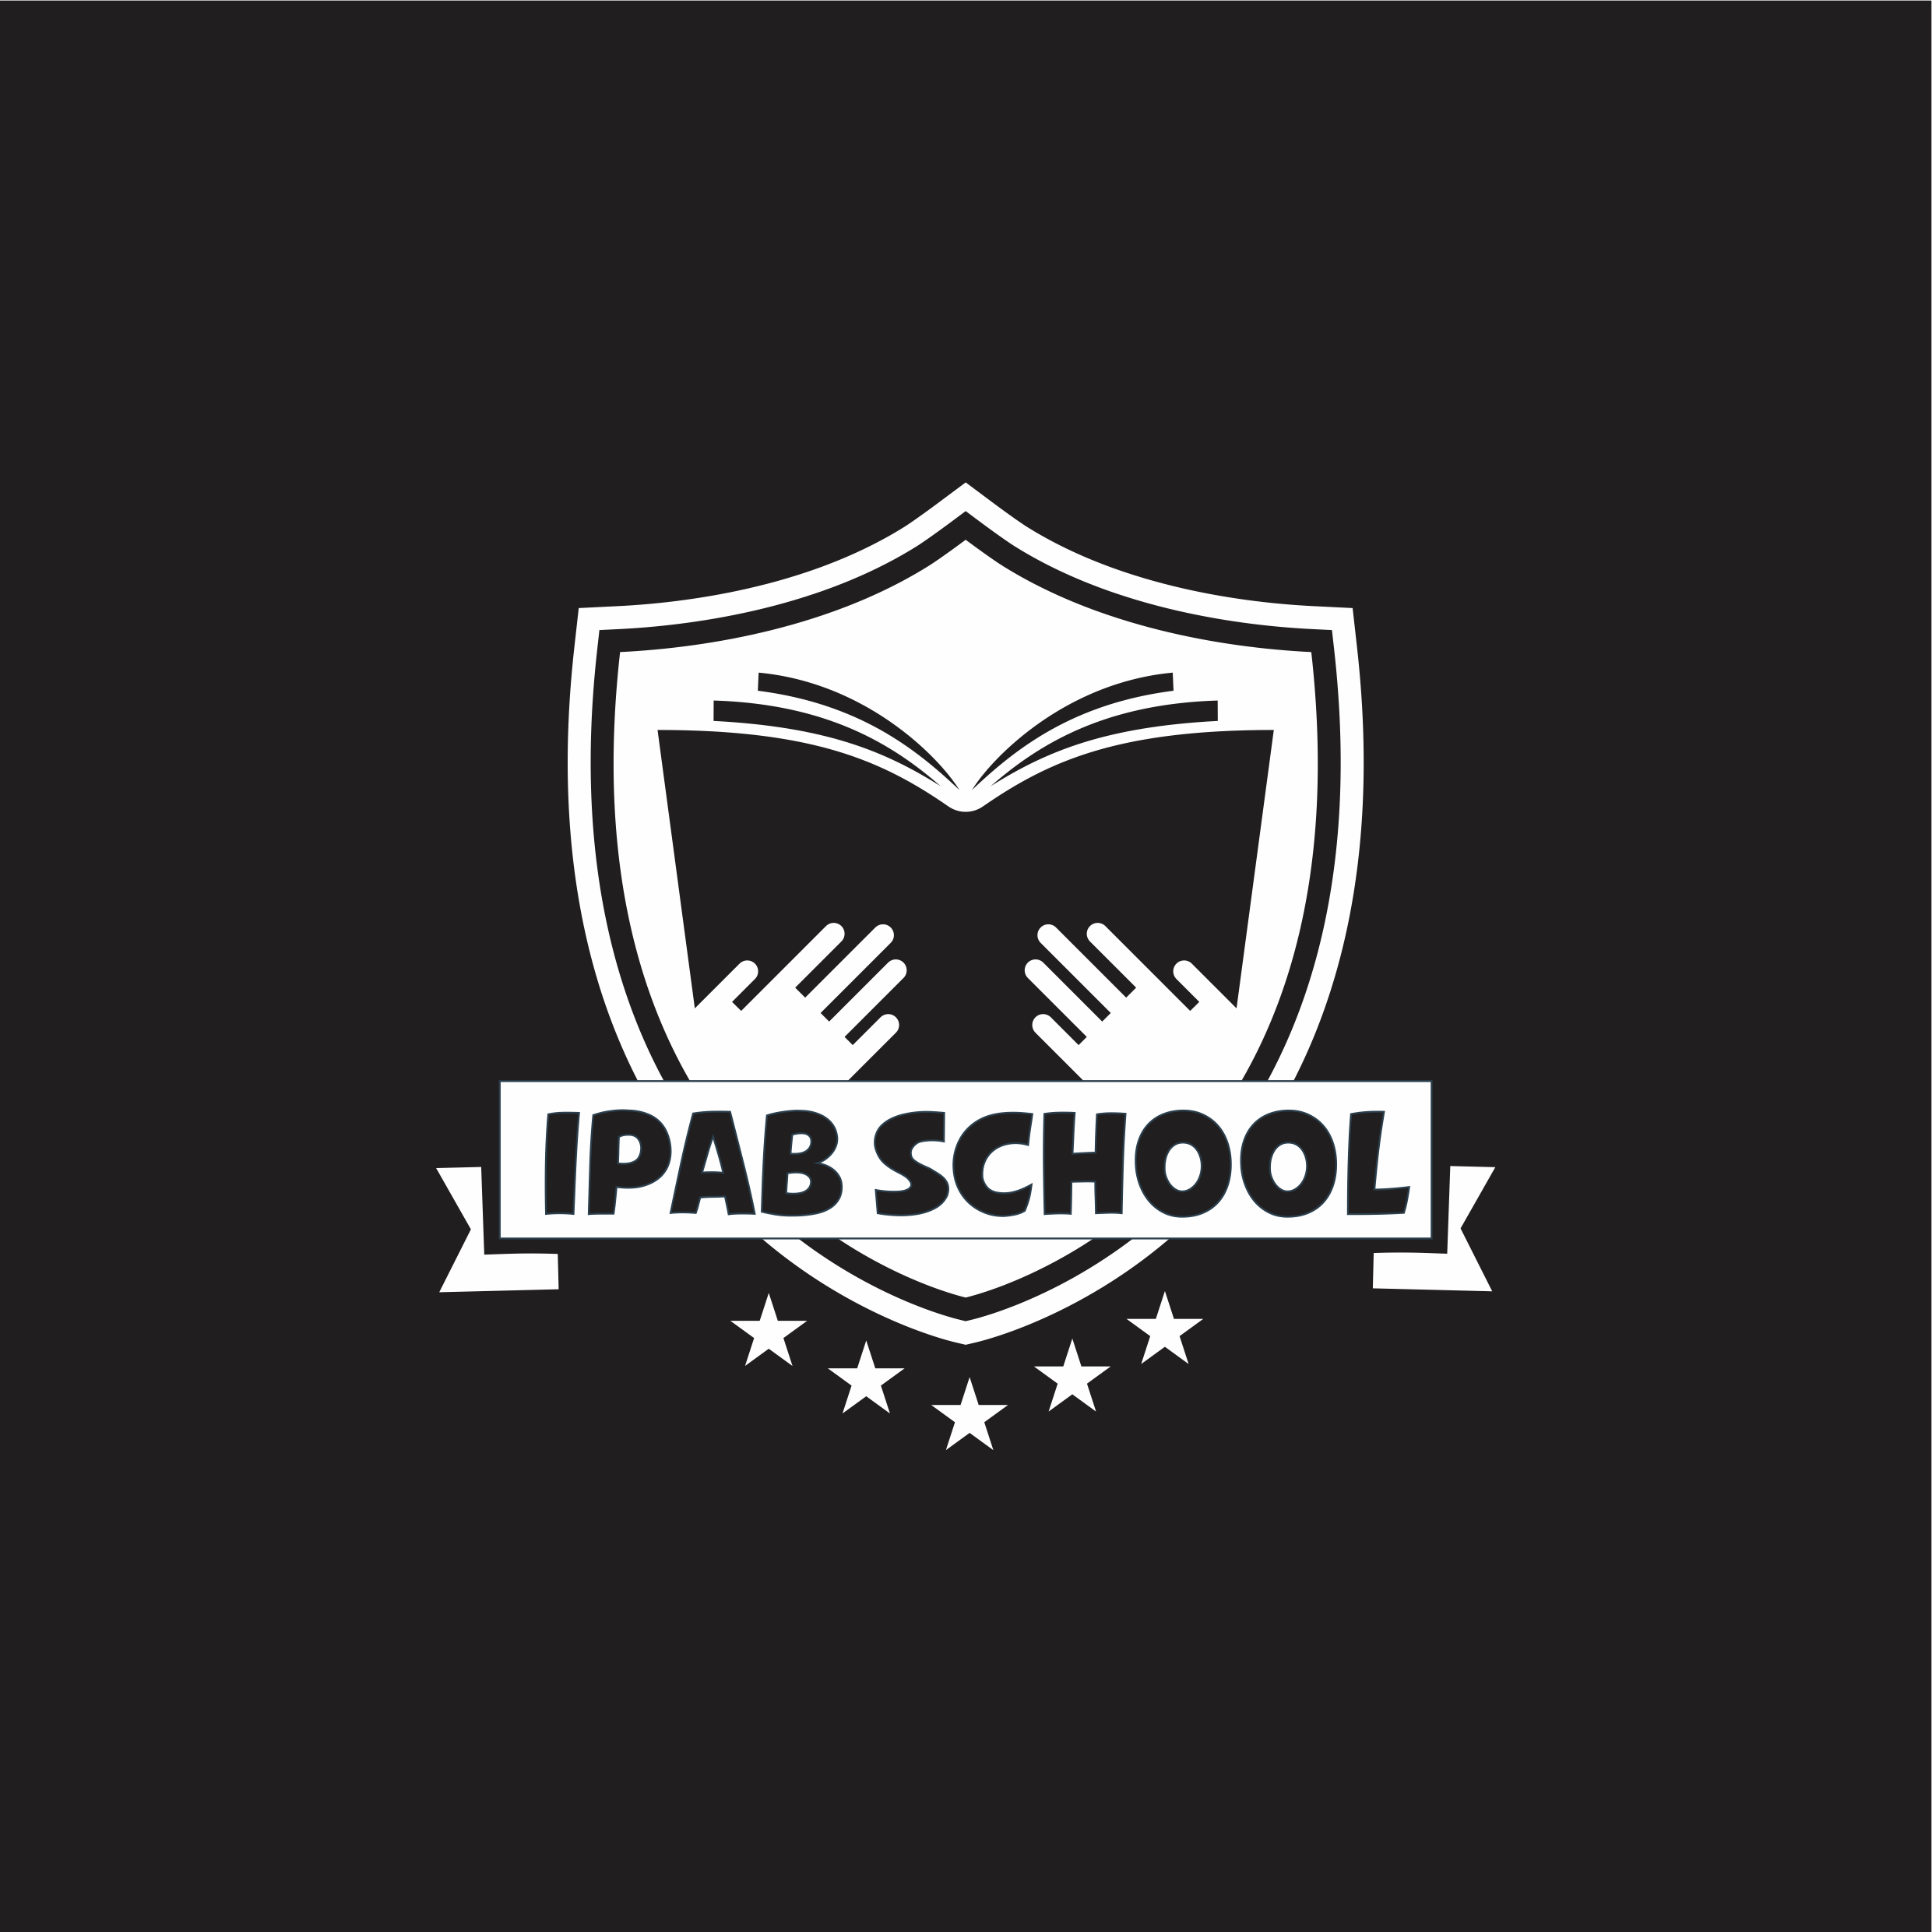 IPAB SCHOOL